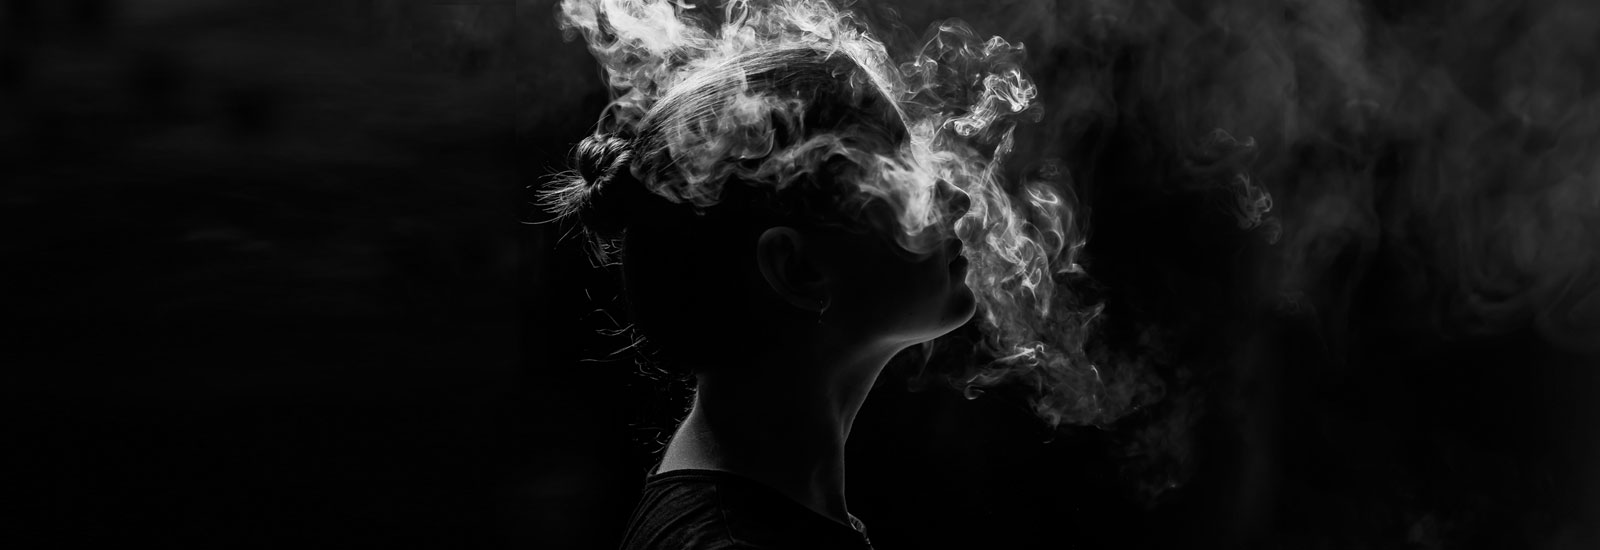 cloud of smoke surrounding a person's head